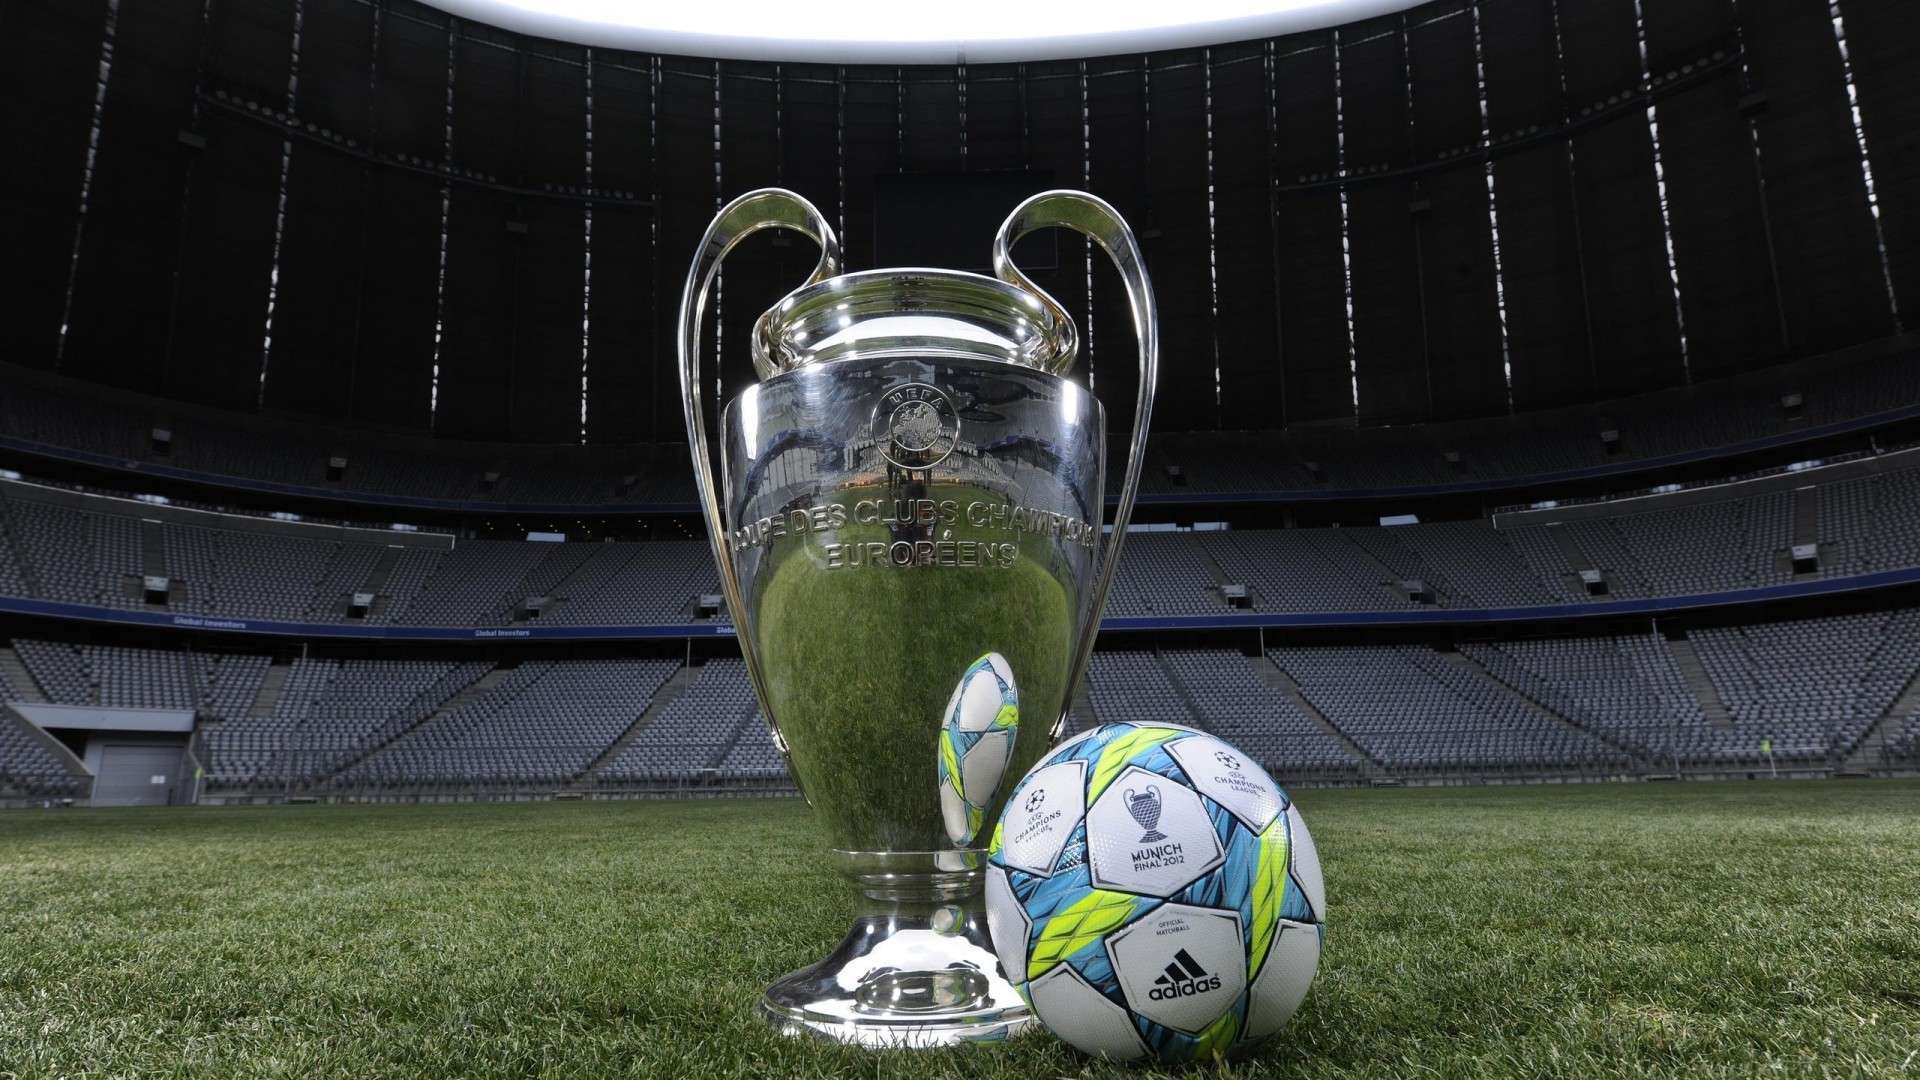 Uefa-Champions-League-2014-Trophy-Desktop-Wallpaper-Download.jpg